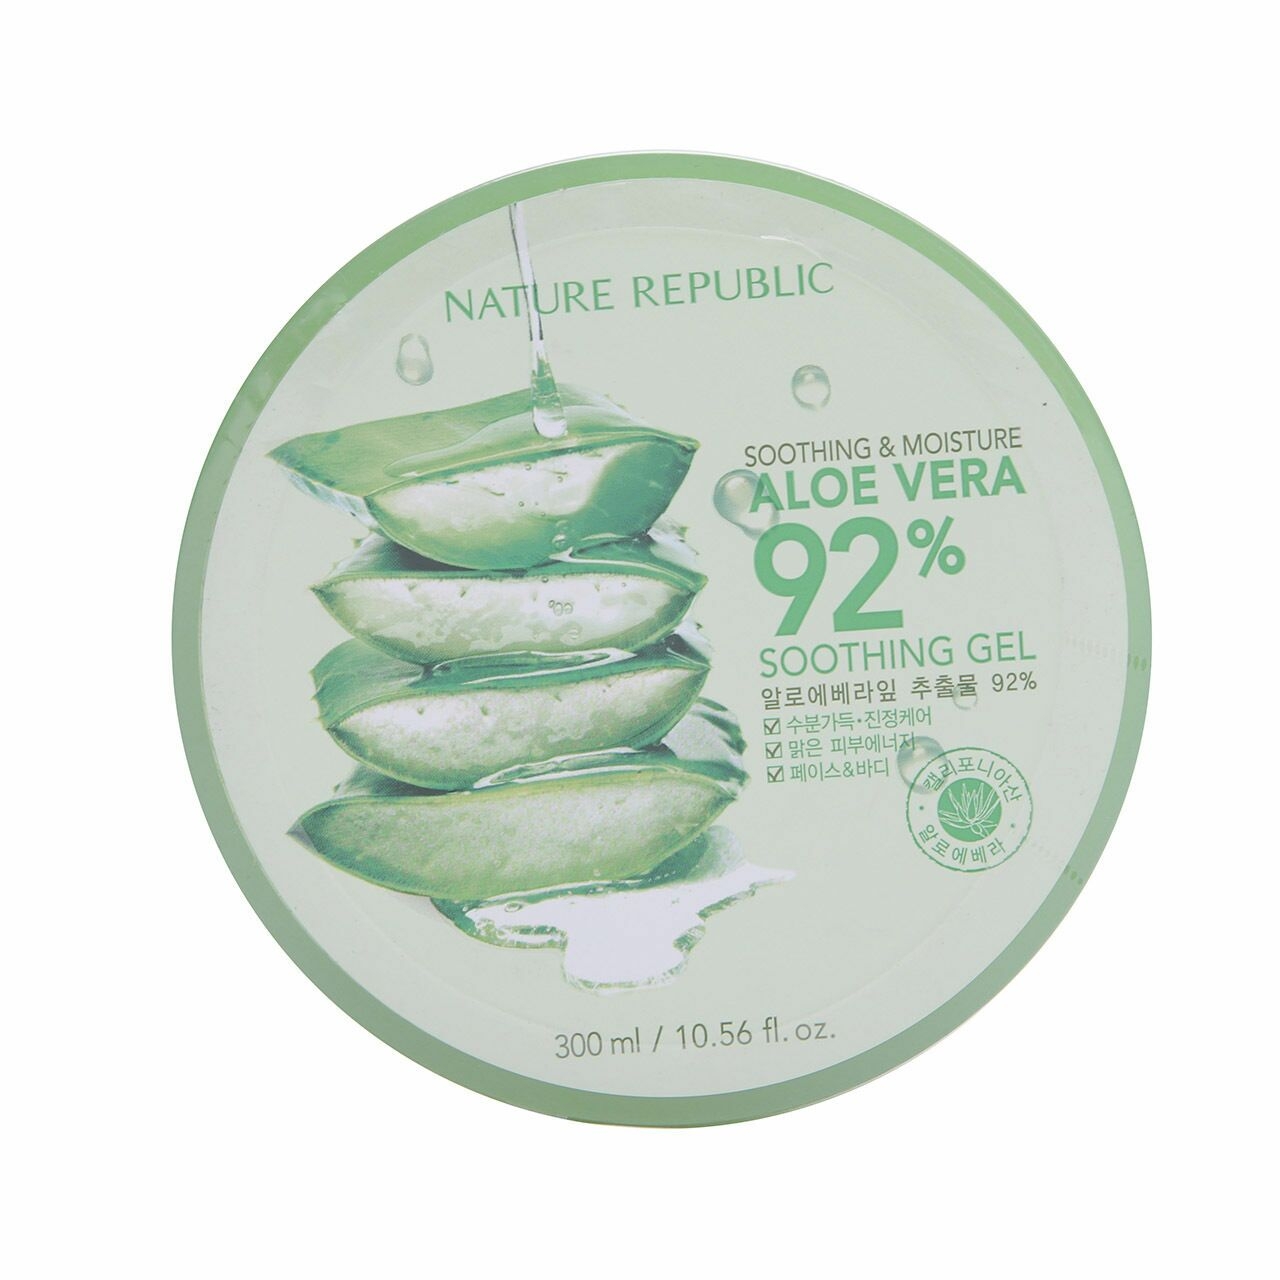 Nature Republic Soothing & Moisture Aloe Vera 92% Skin Care